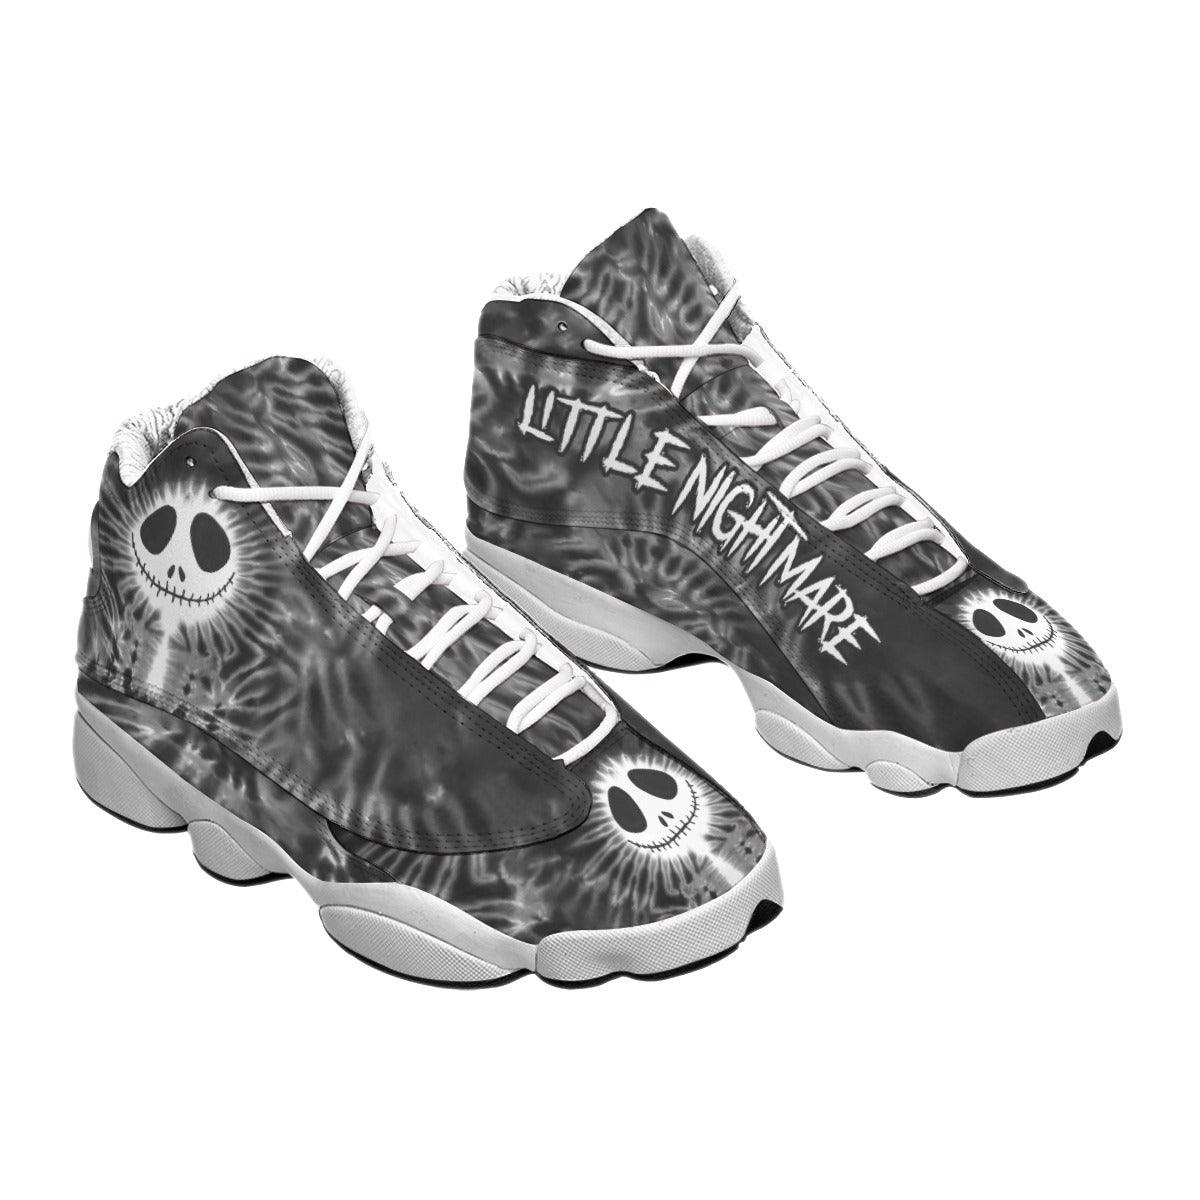 Nightmare Tiedye Gray Women's Curved Basketball Shoes Sneaker - Wonder Skull